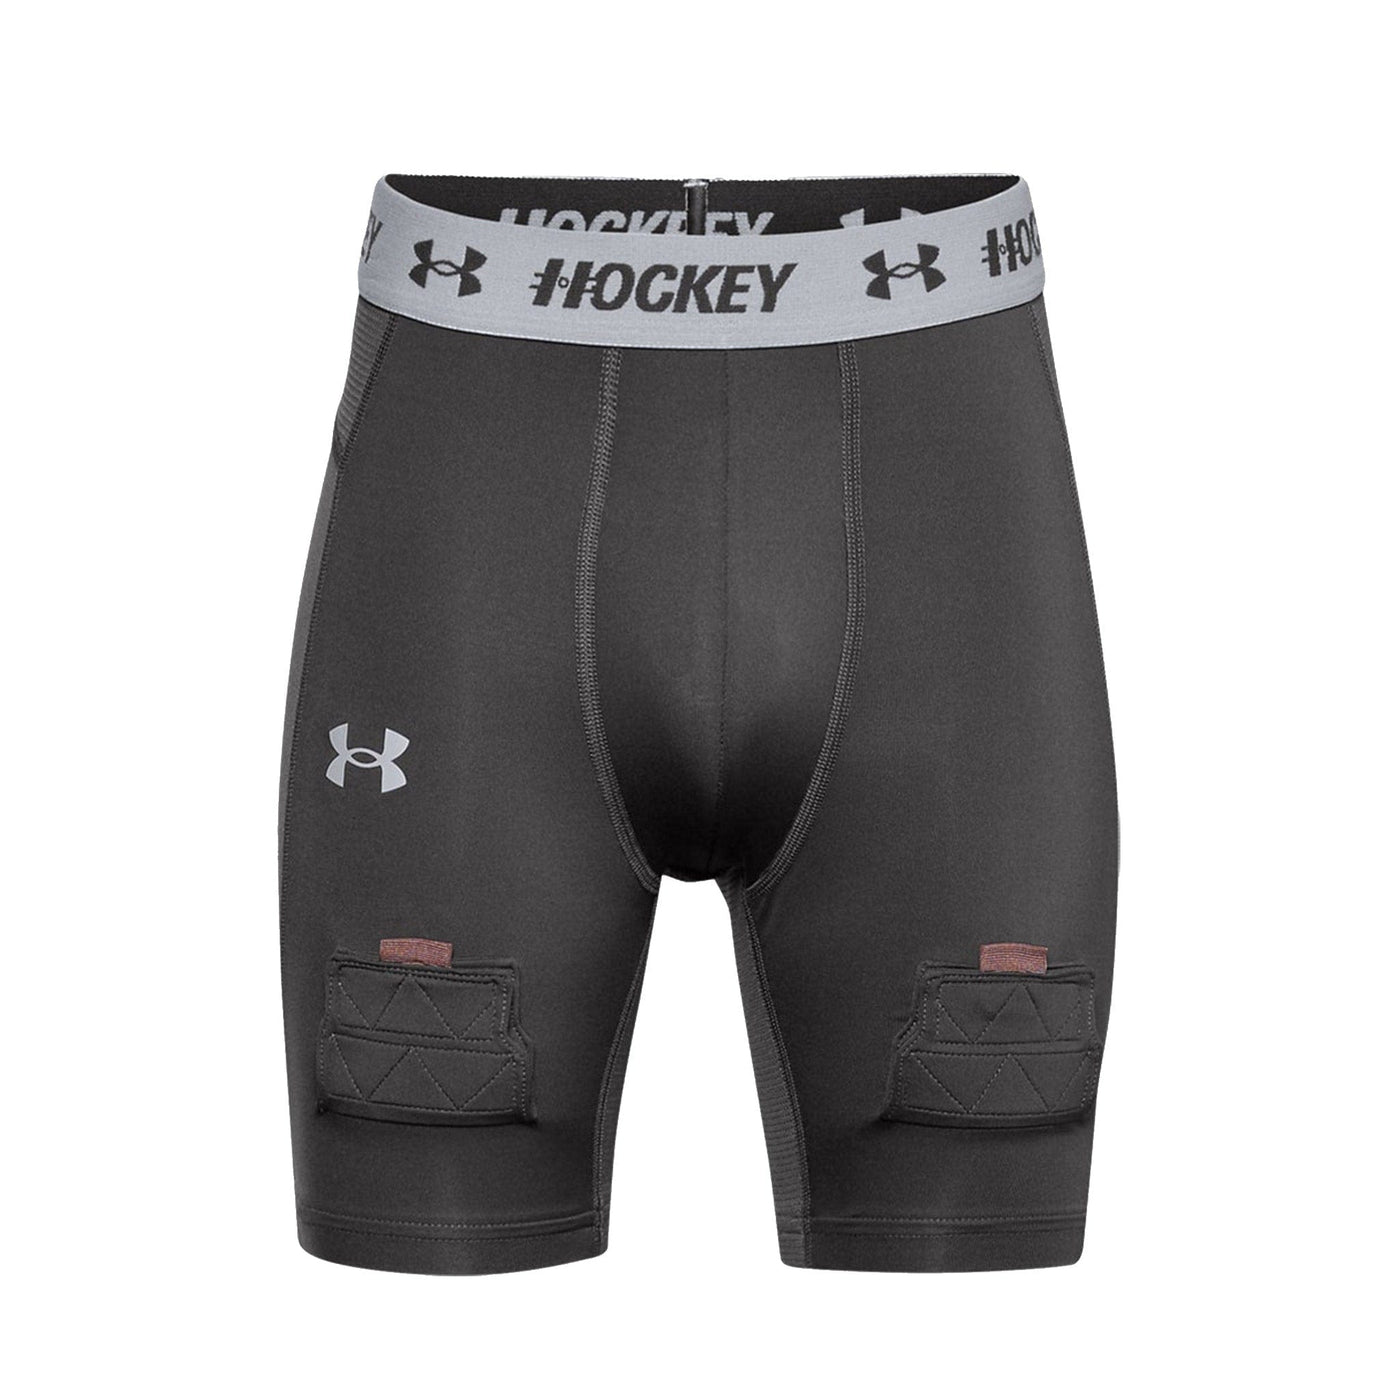 Under Armour Hockey Senior Compression Jock Shorts